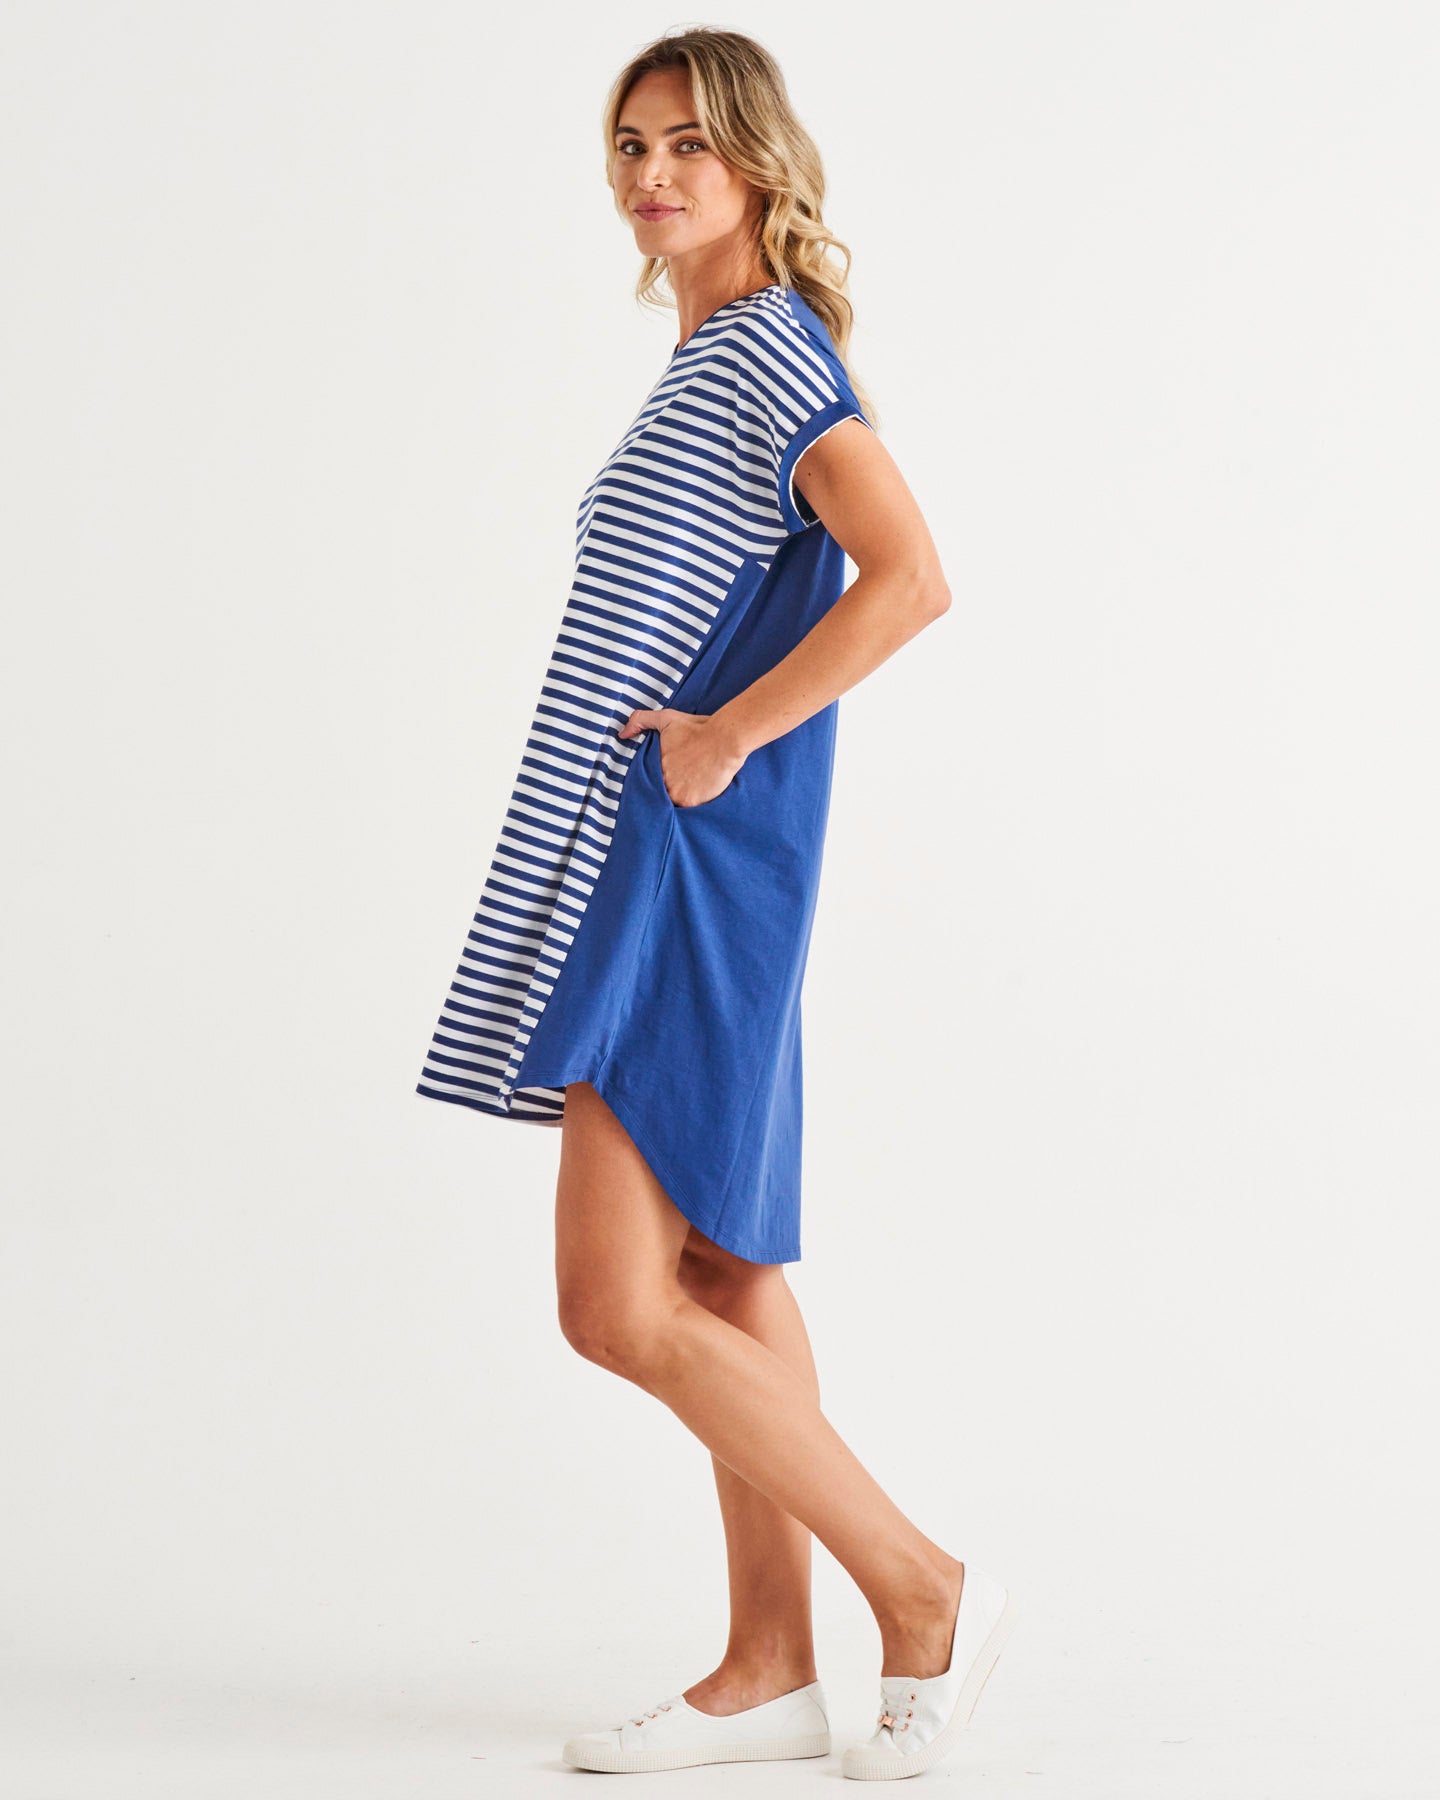 Maxine T-Shirt Dress - Ocean Stripe